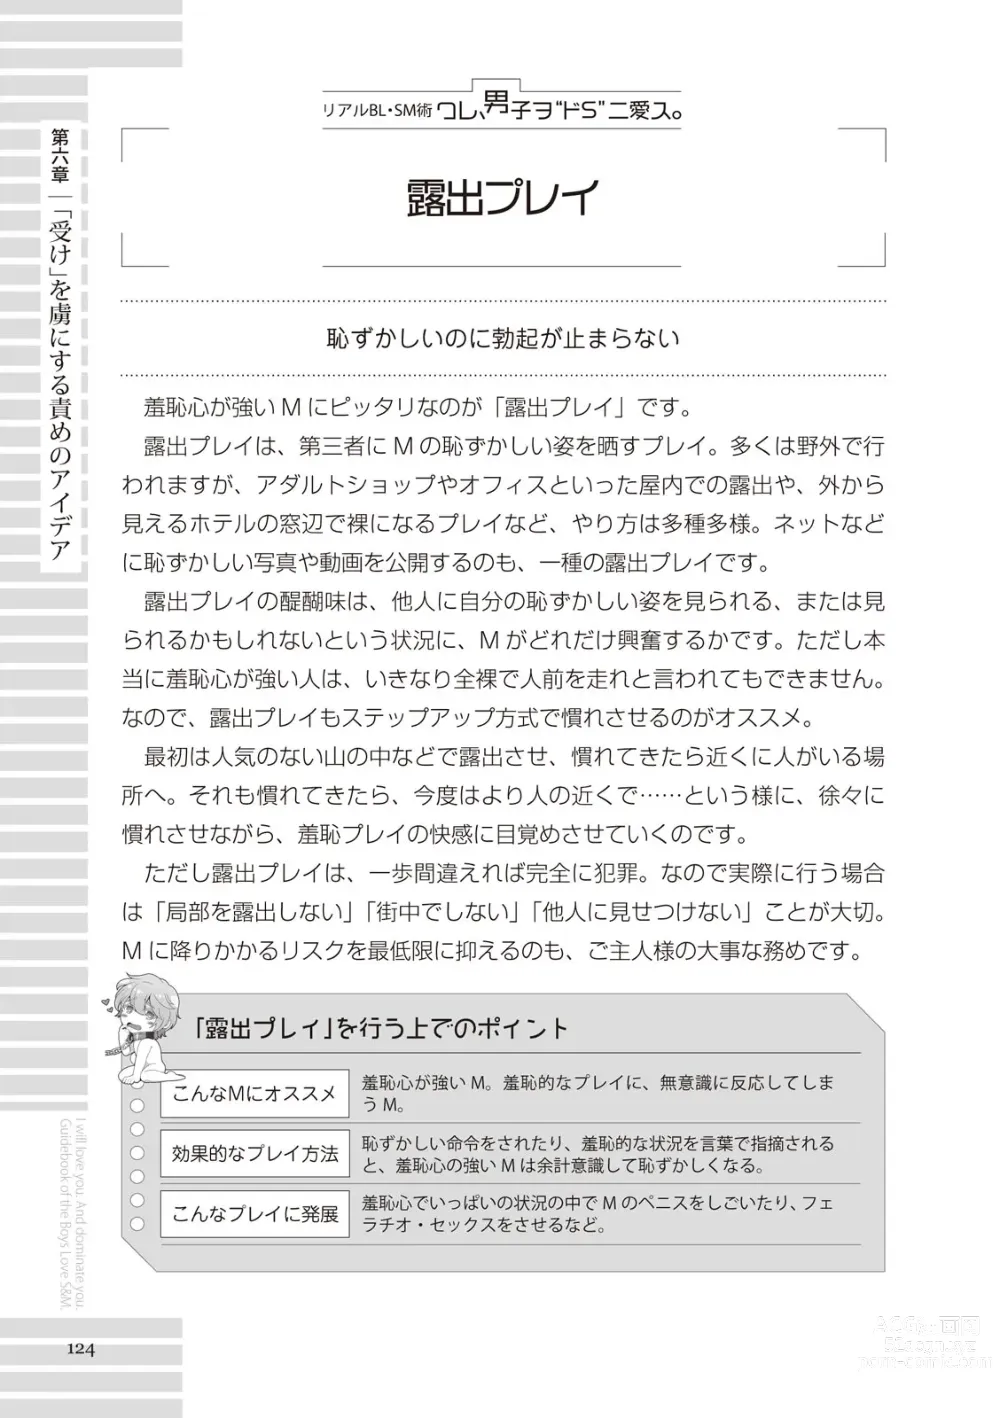 Page 124 of manga Real BL SM-jutsu Ware, Danshi Do-S